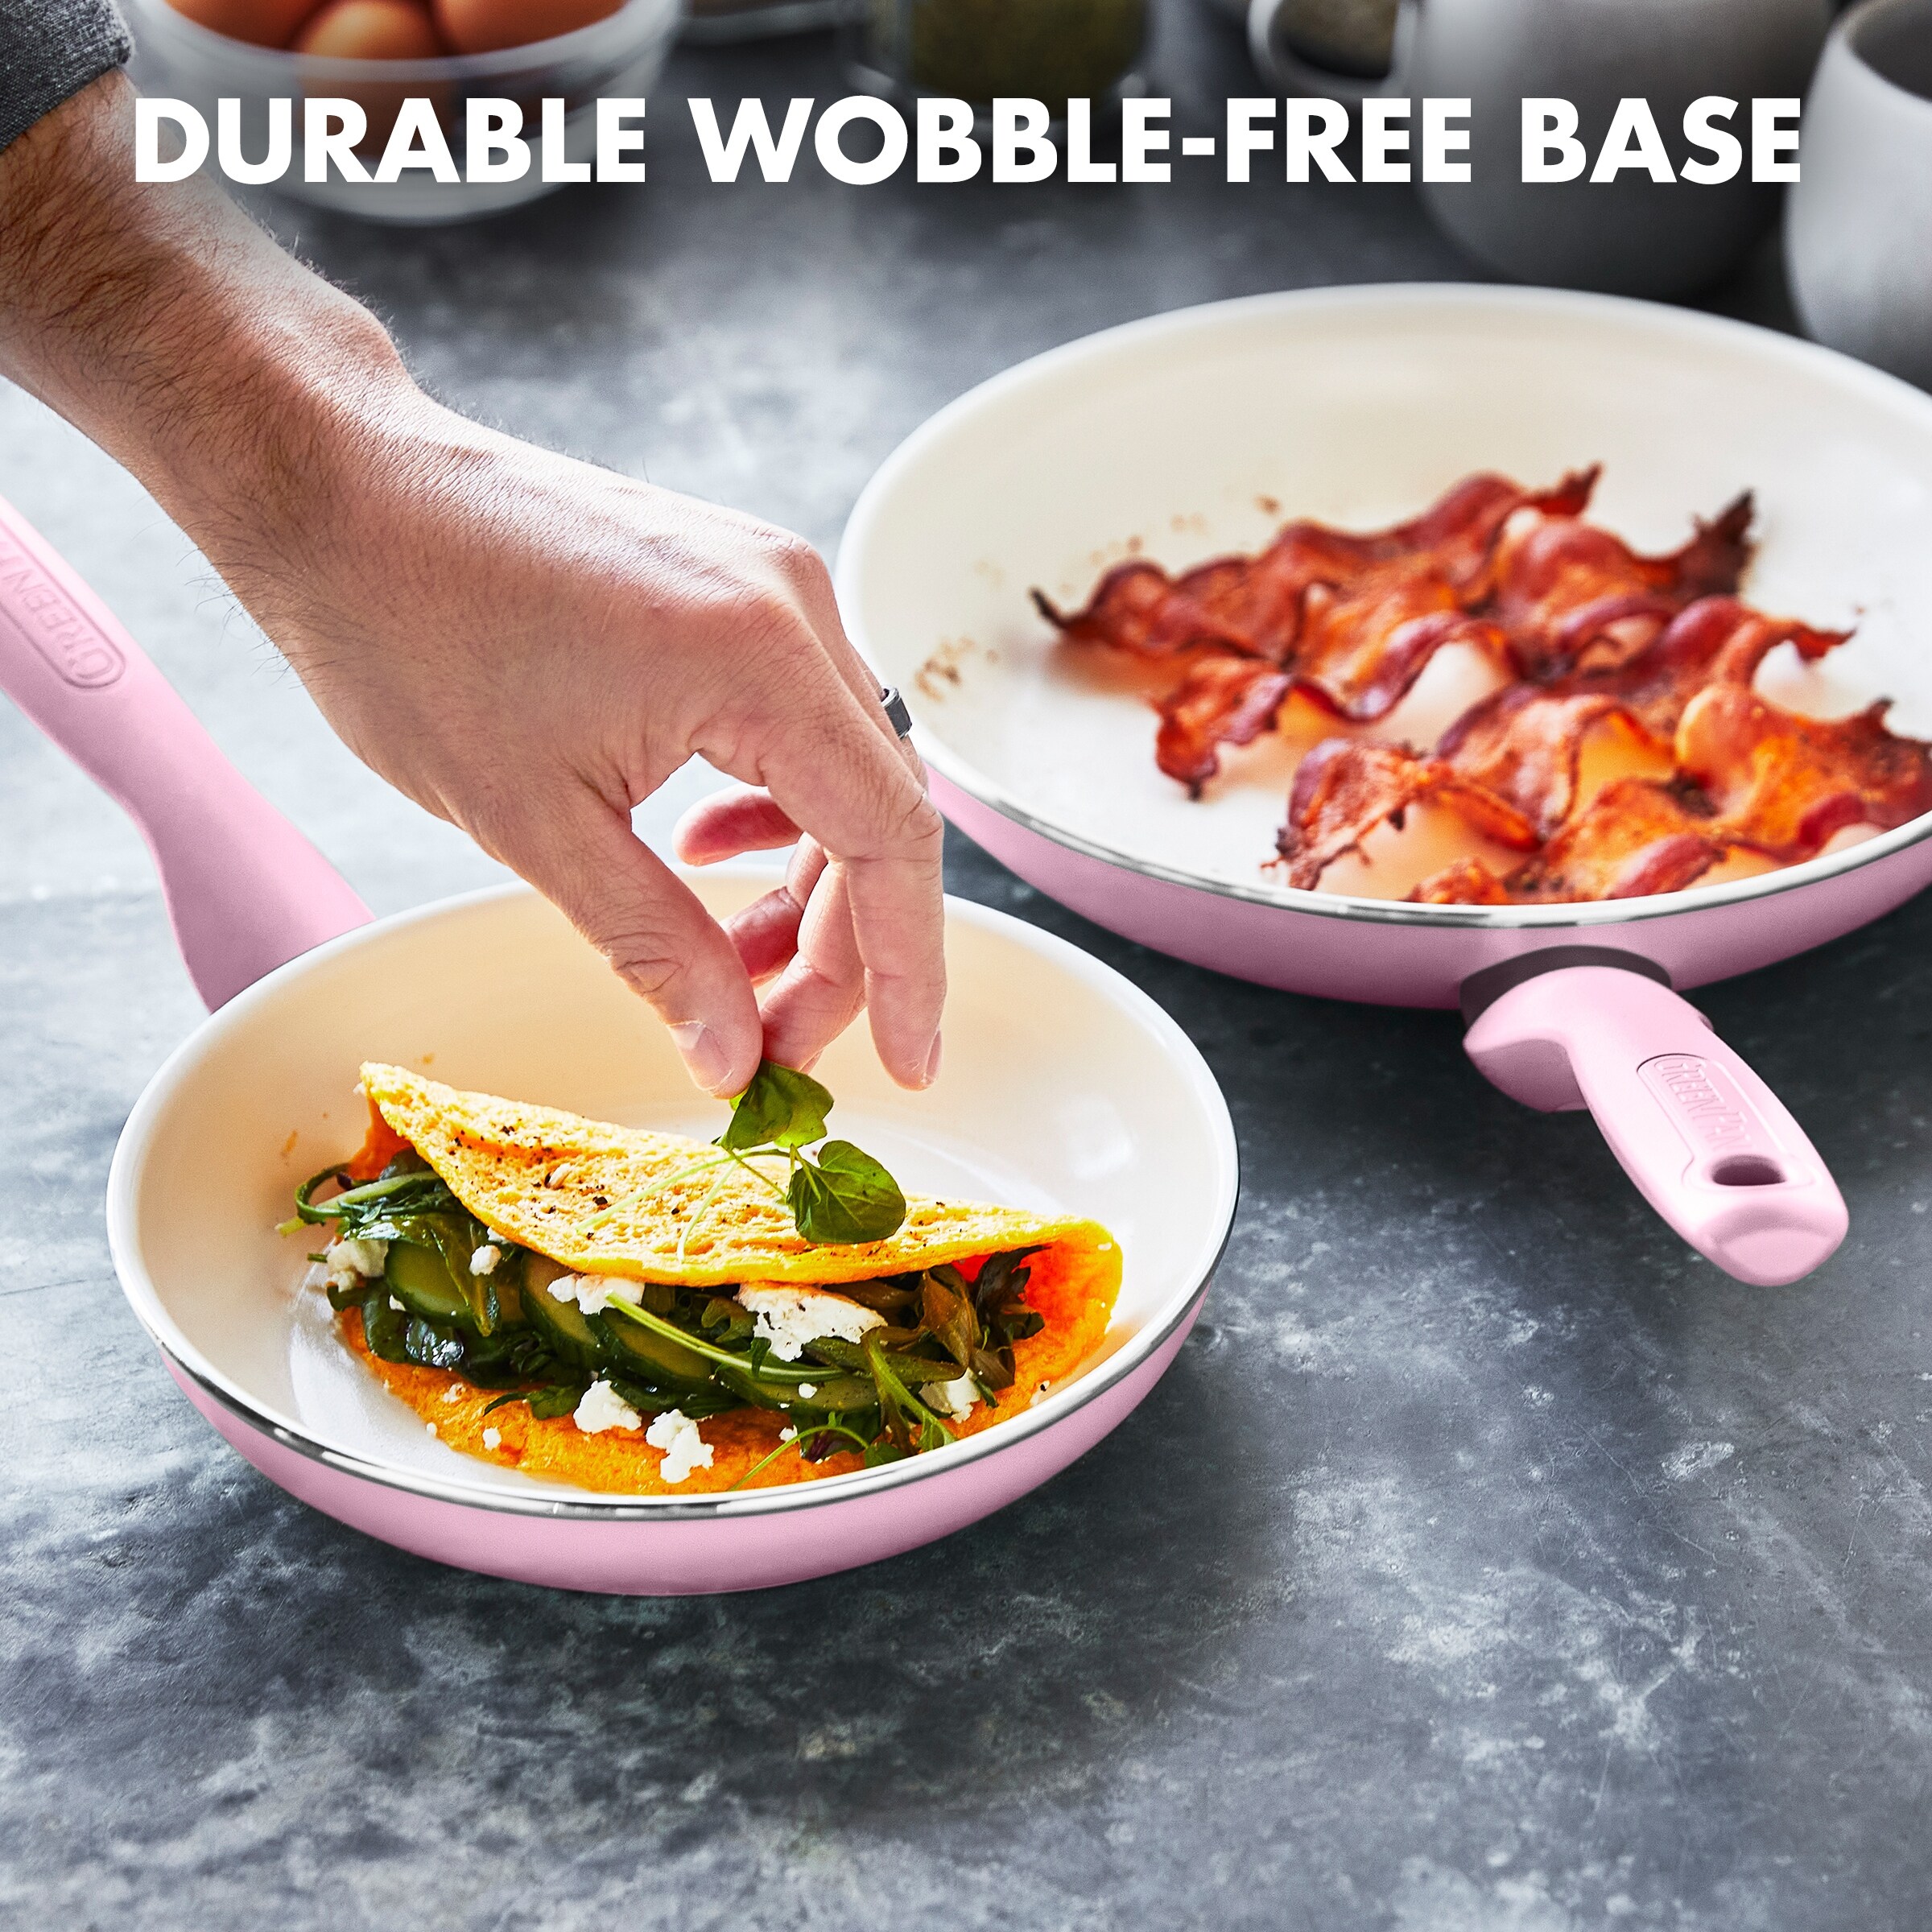 Ceramic Nonstick 16pc Cookware Set, PFAS-Free, Dishwasher Safe, Pink - Bed  Bath & Beyond - 37254308